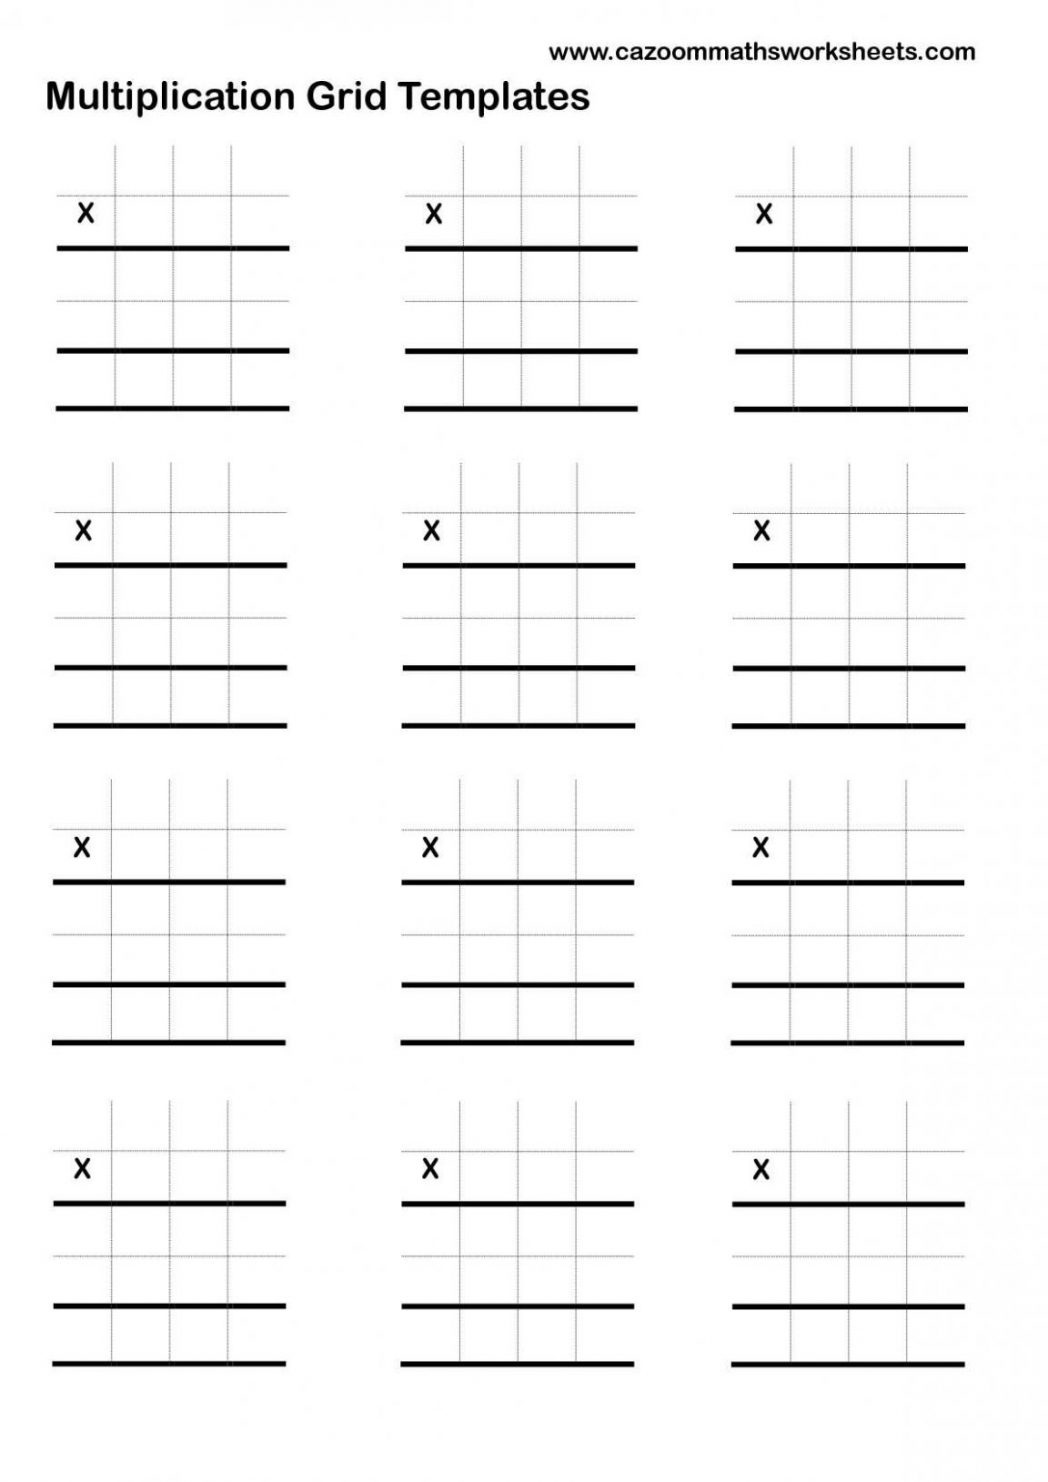 softschools-math-worksheets-multiplication-free-printable